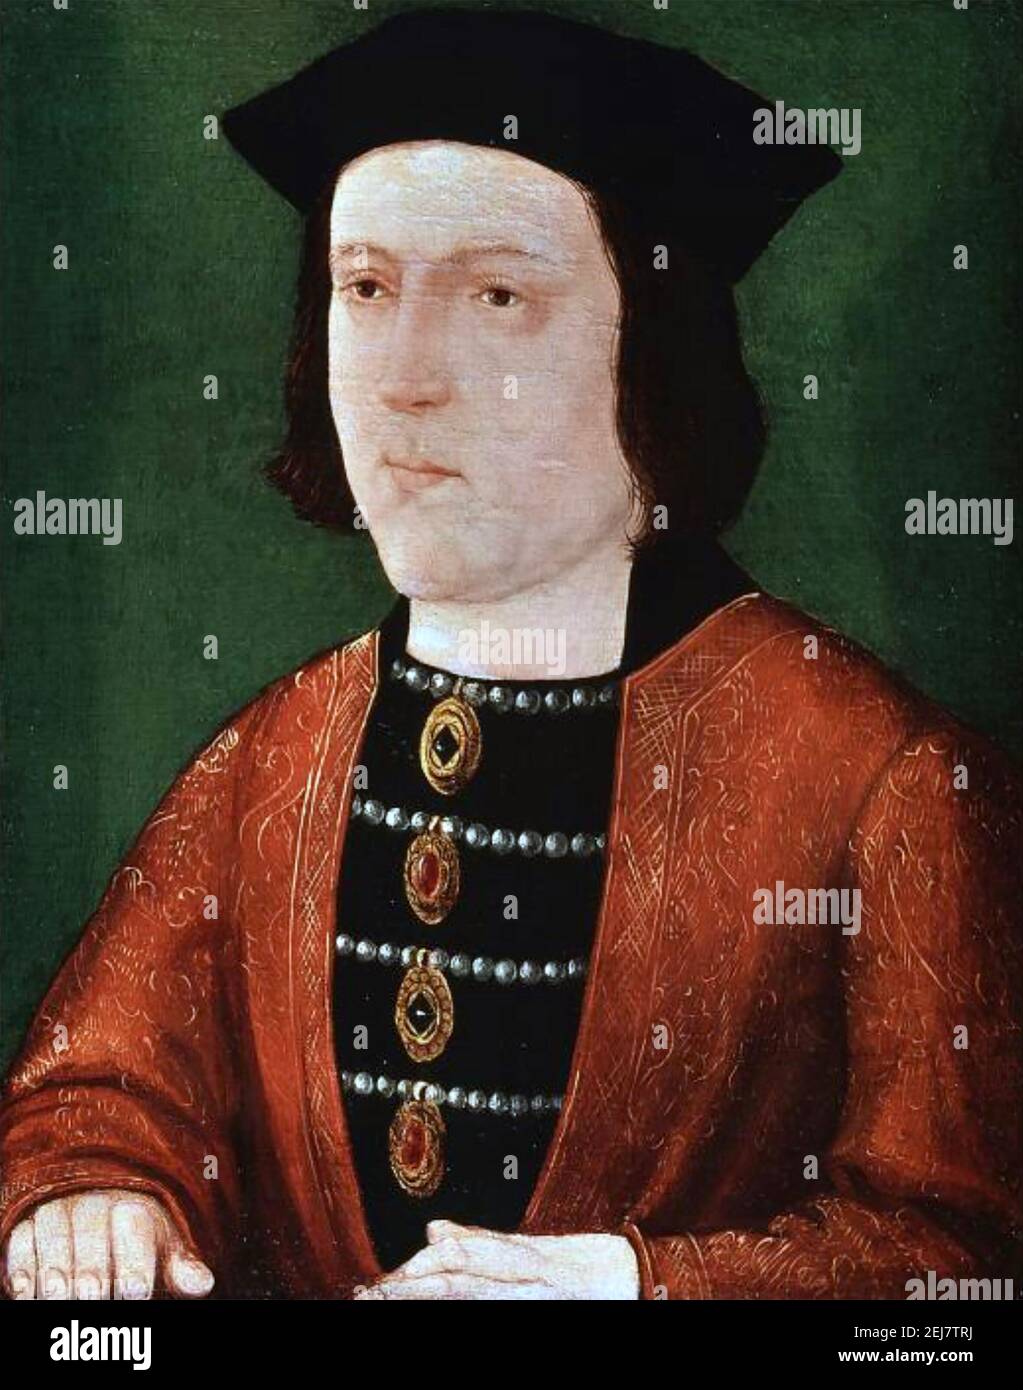 EDOARDO IV D'INGHILTERRA (1442-1483) Foto Stock